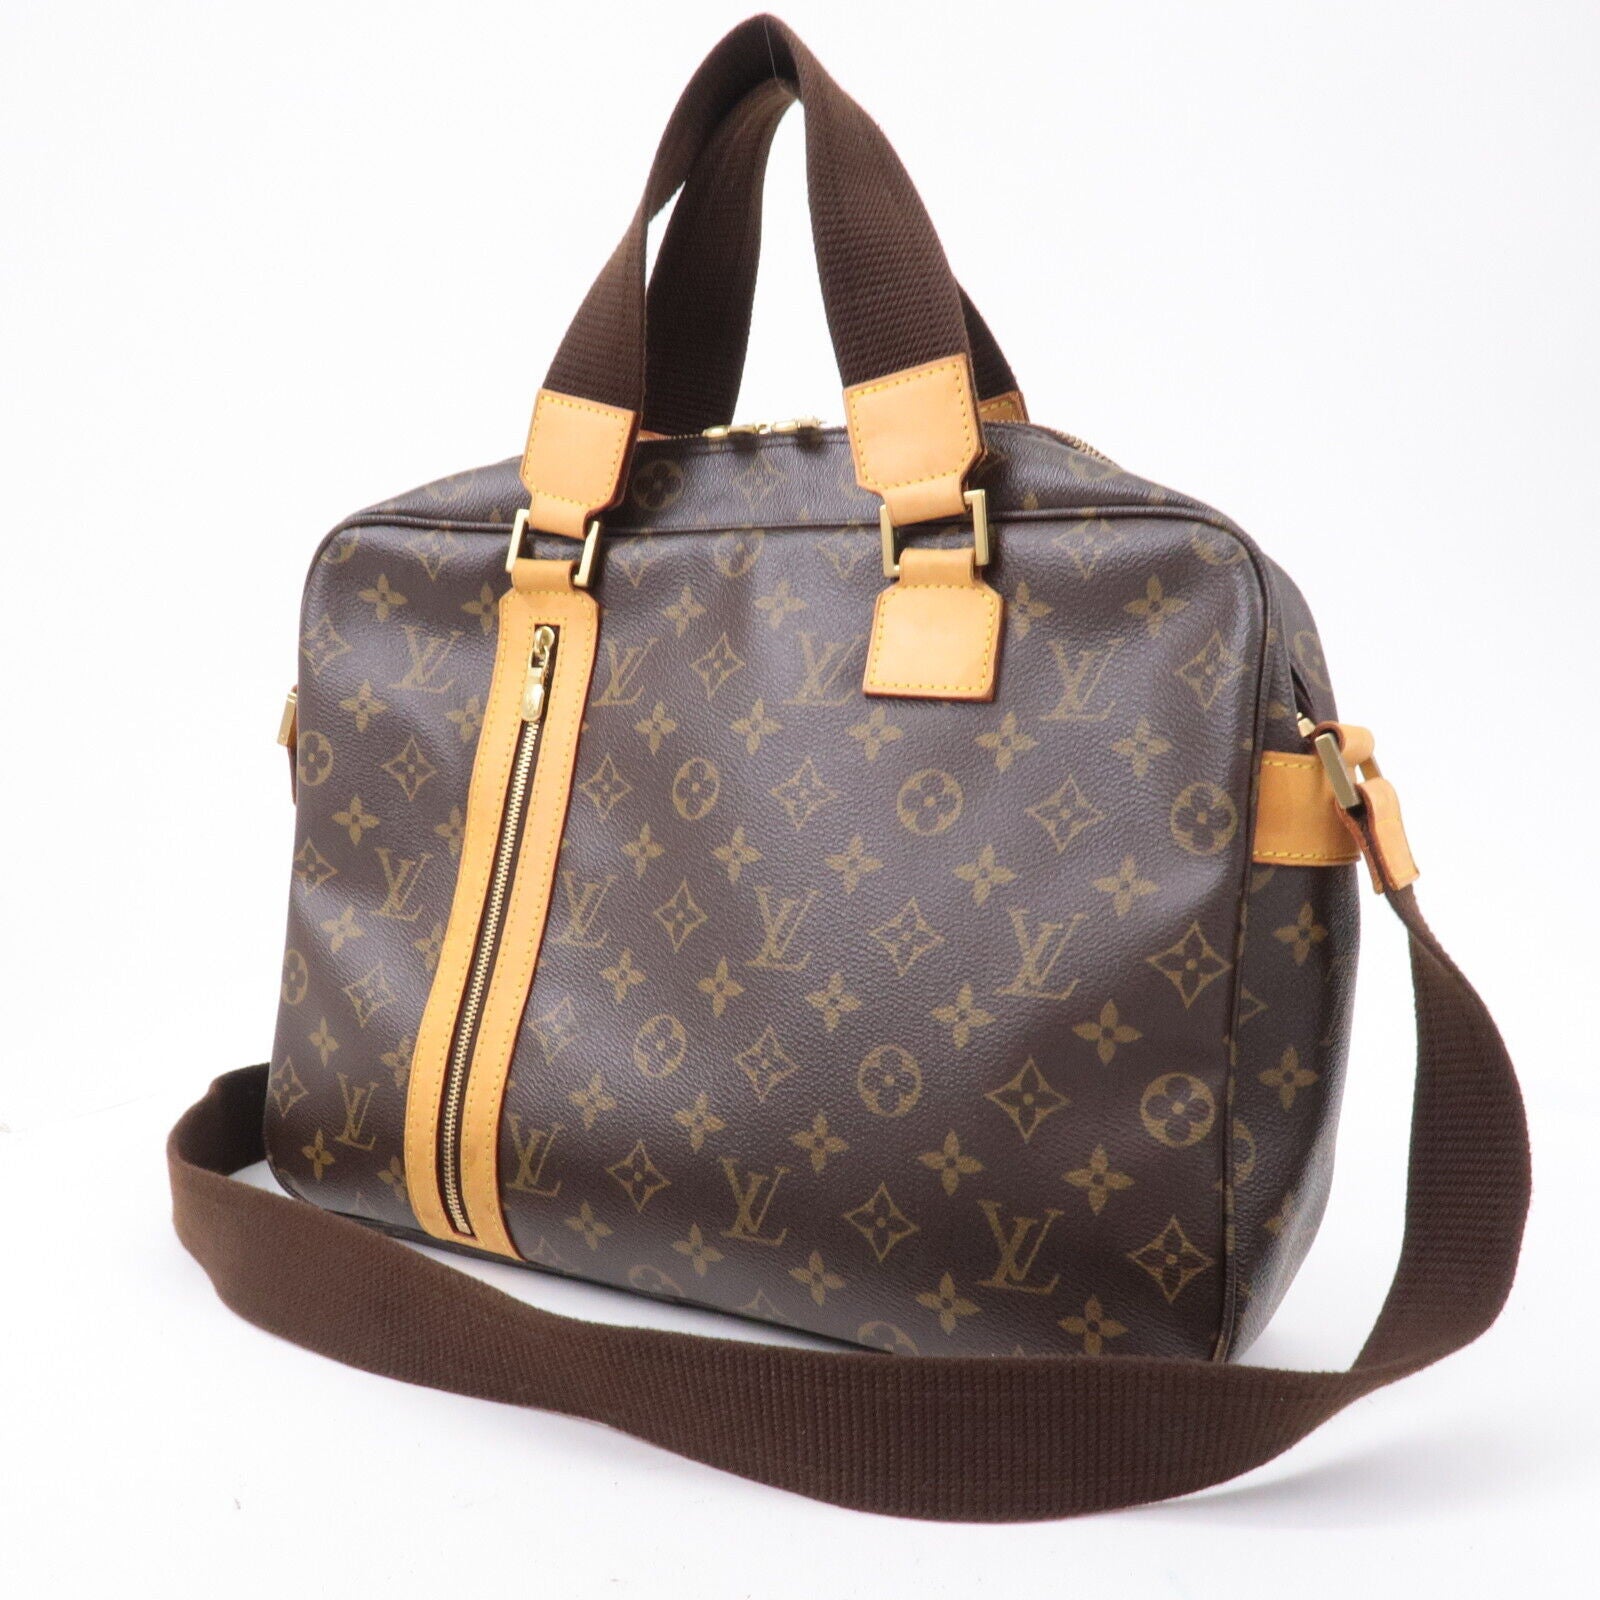 Authentic Preloved Louis Vuitton Monogram Sac Bosphore Briefcase Bag